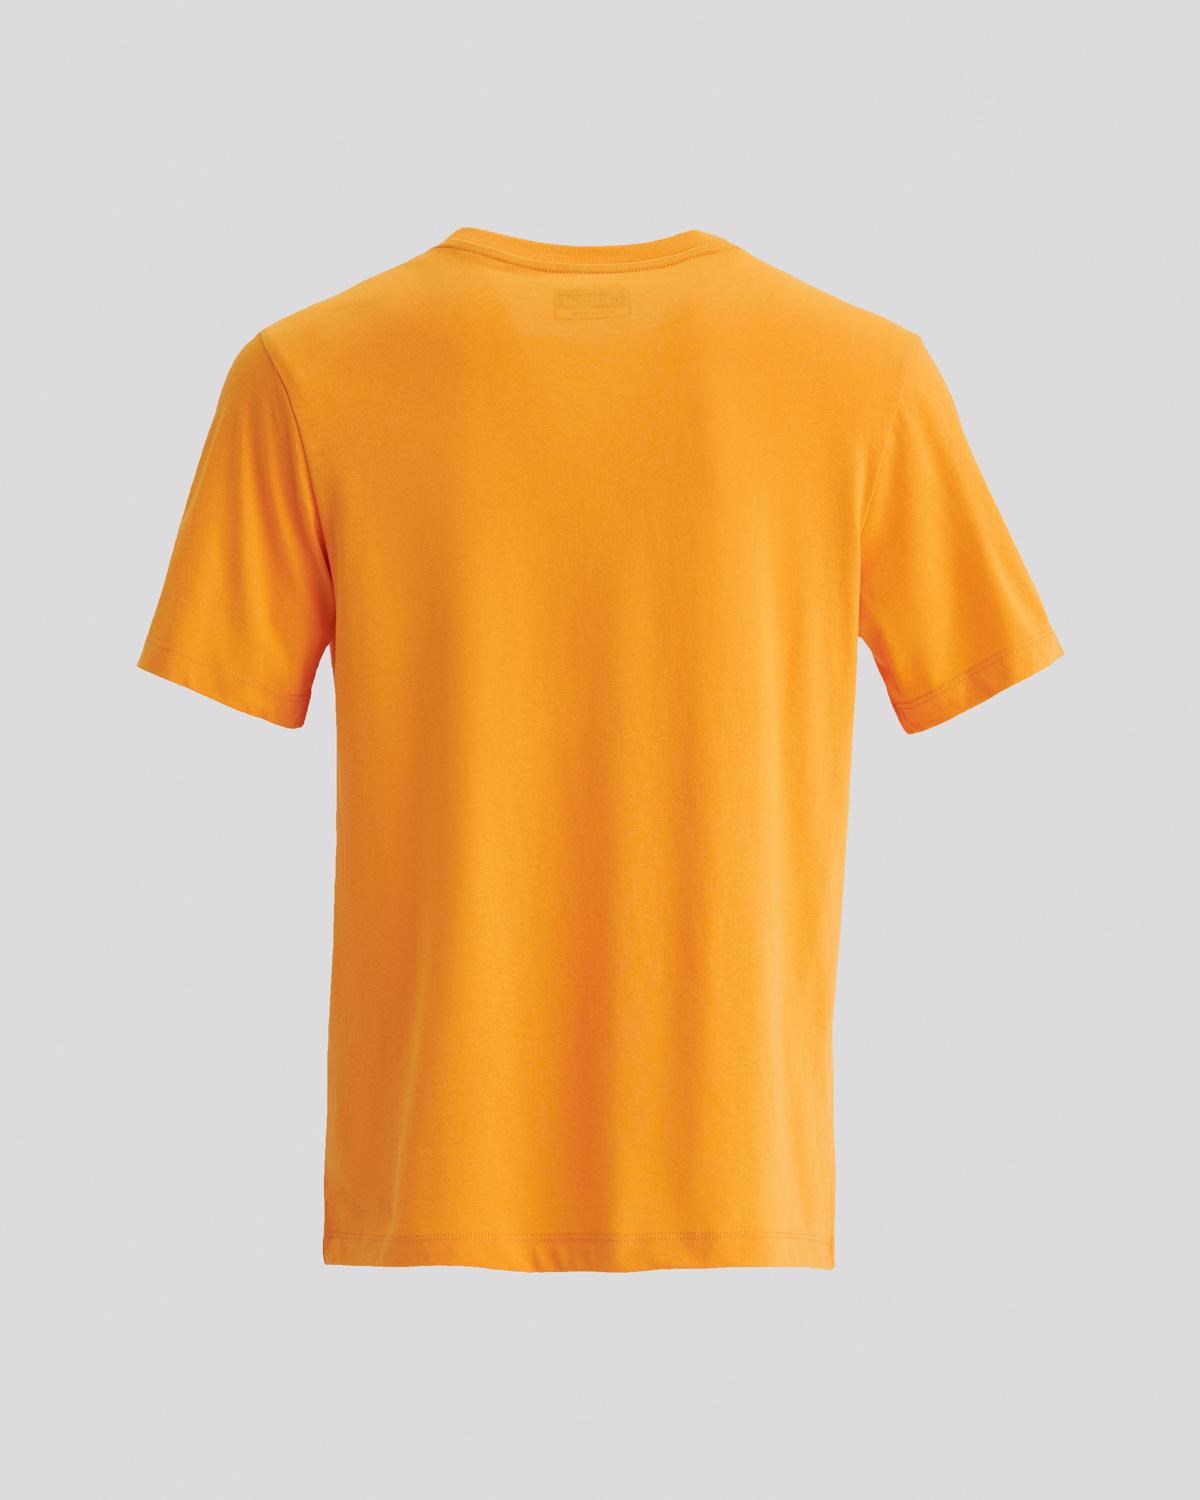 Kappa Erkek T-Shirt 331F7CW Orange Lt - Whıte - Blue Marıtıme